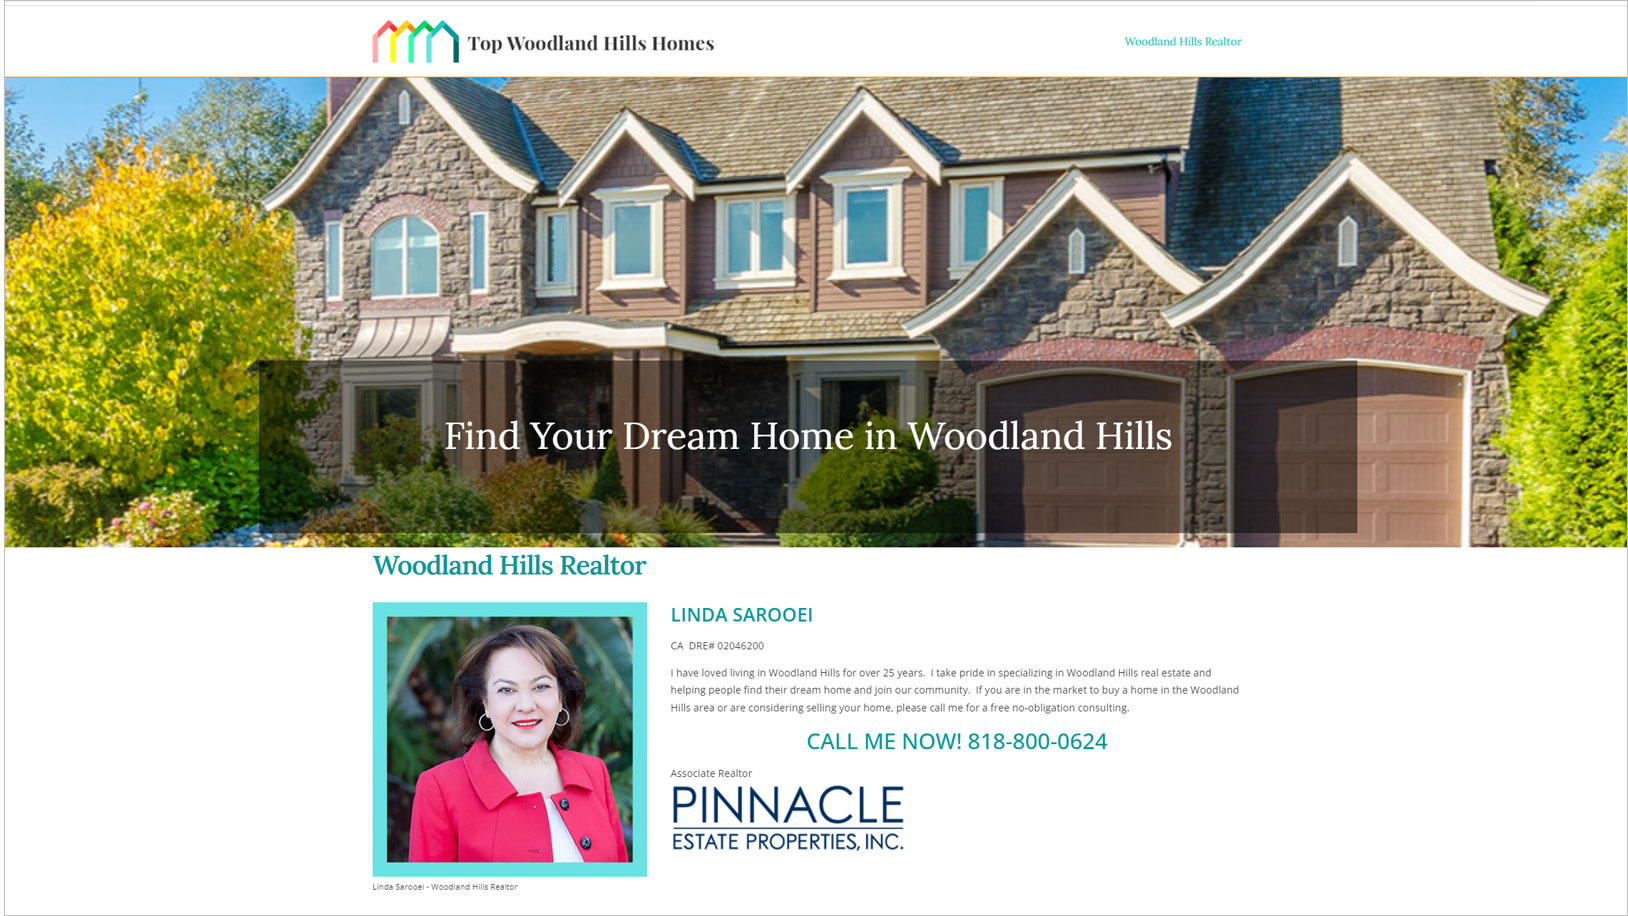 Case Study Top Woodland Hills Homes